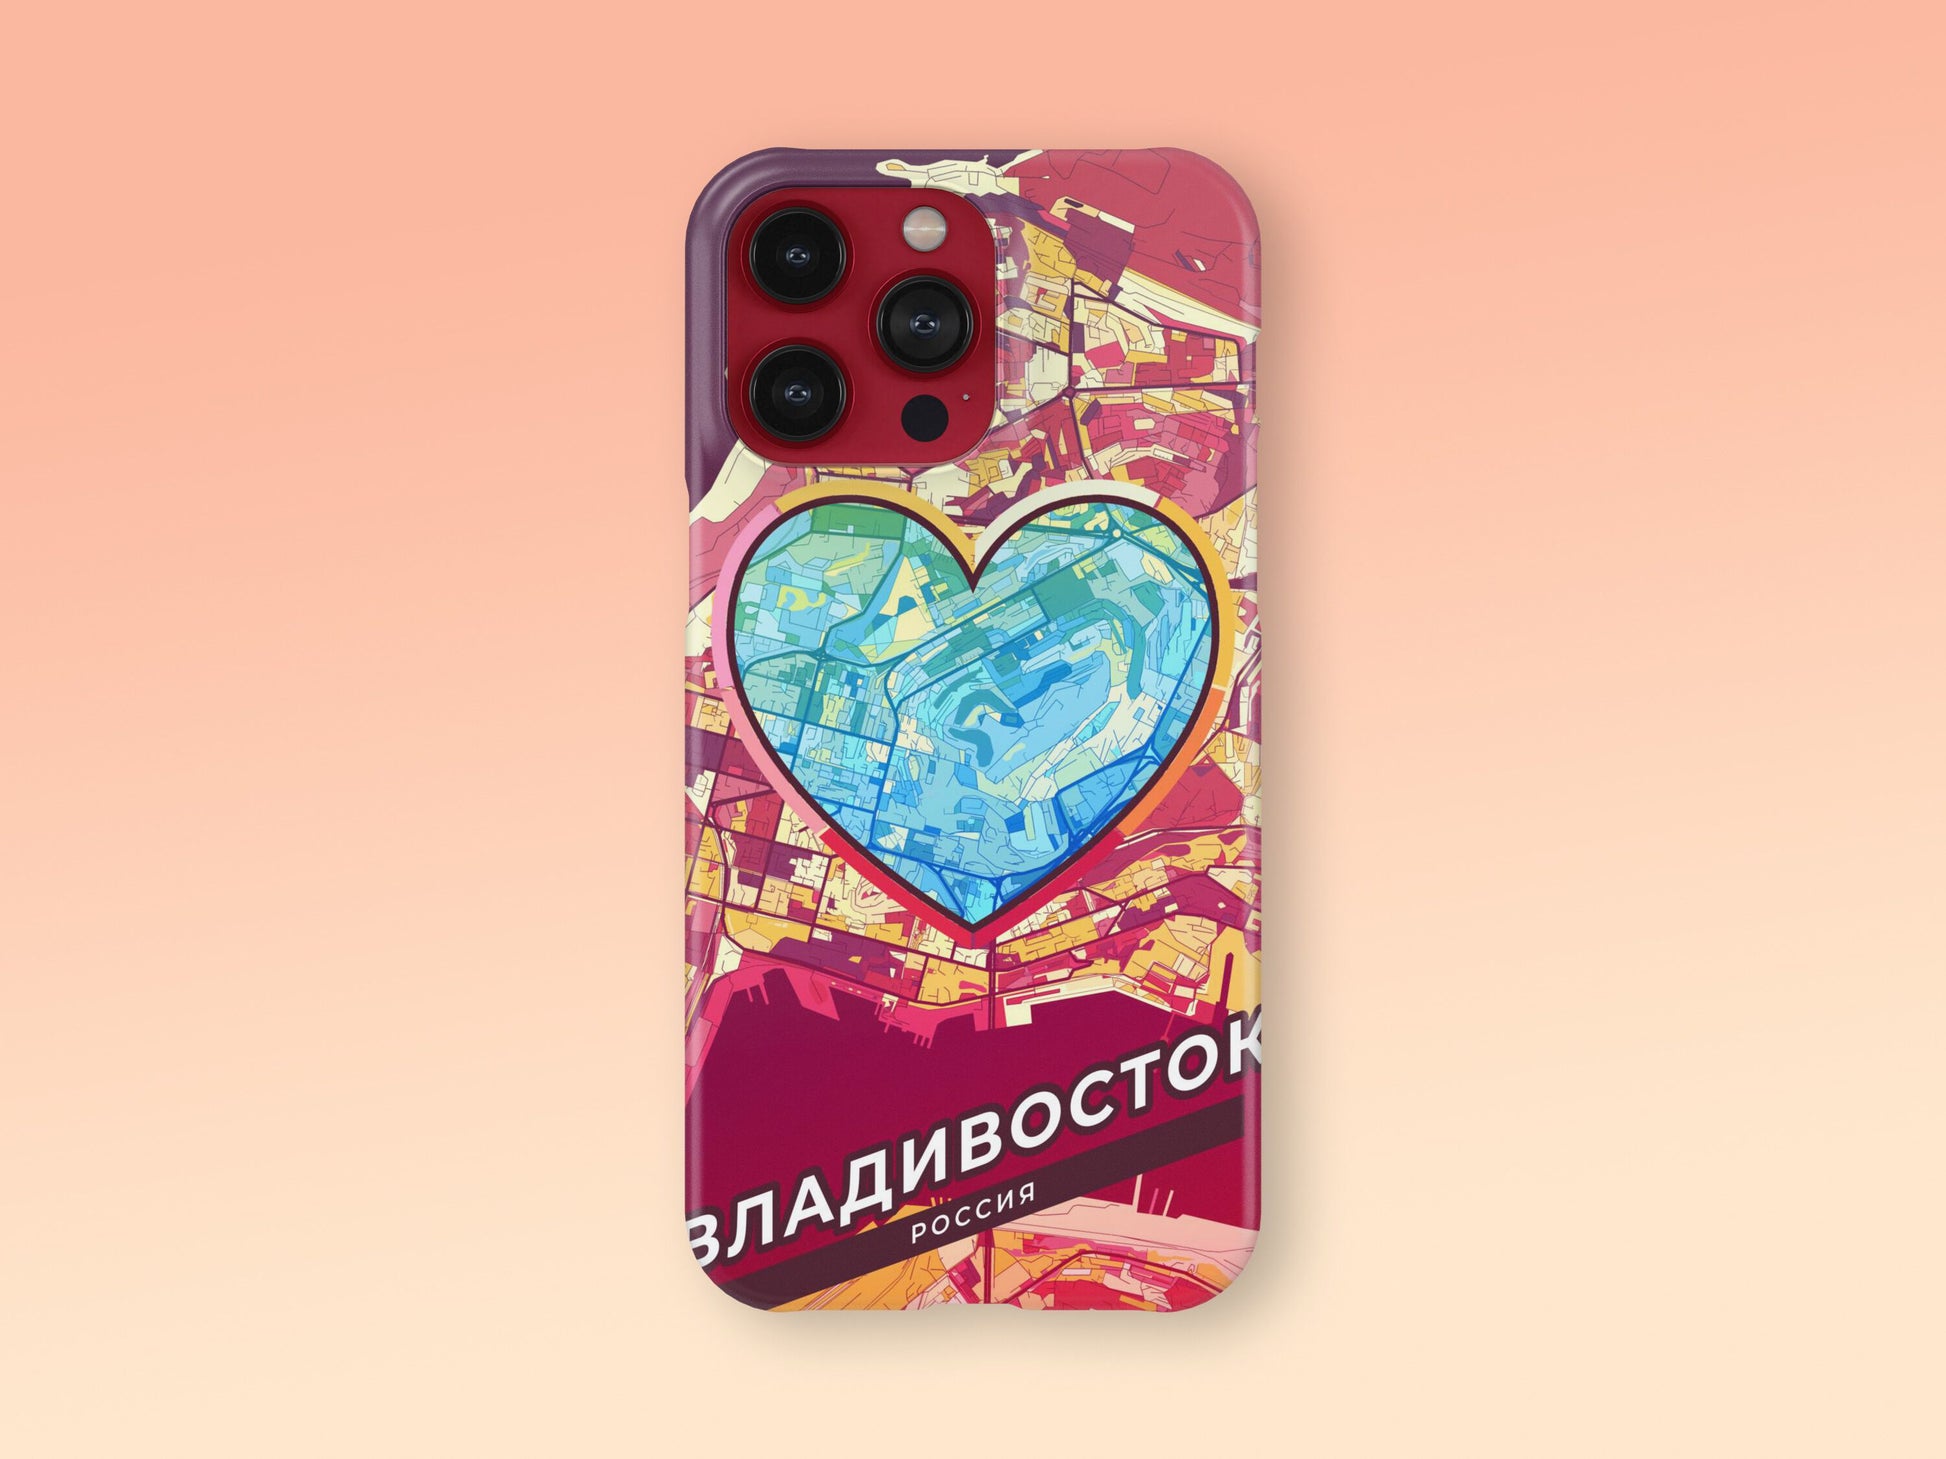 Vladivostok Russia slim phone case with colorful icon 2